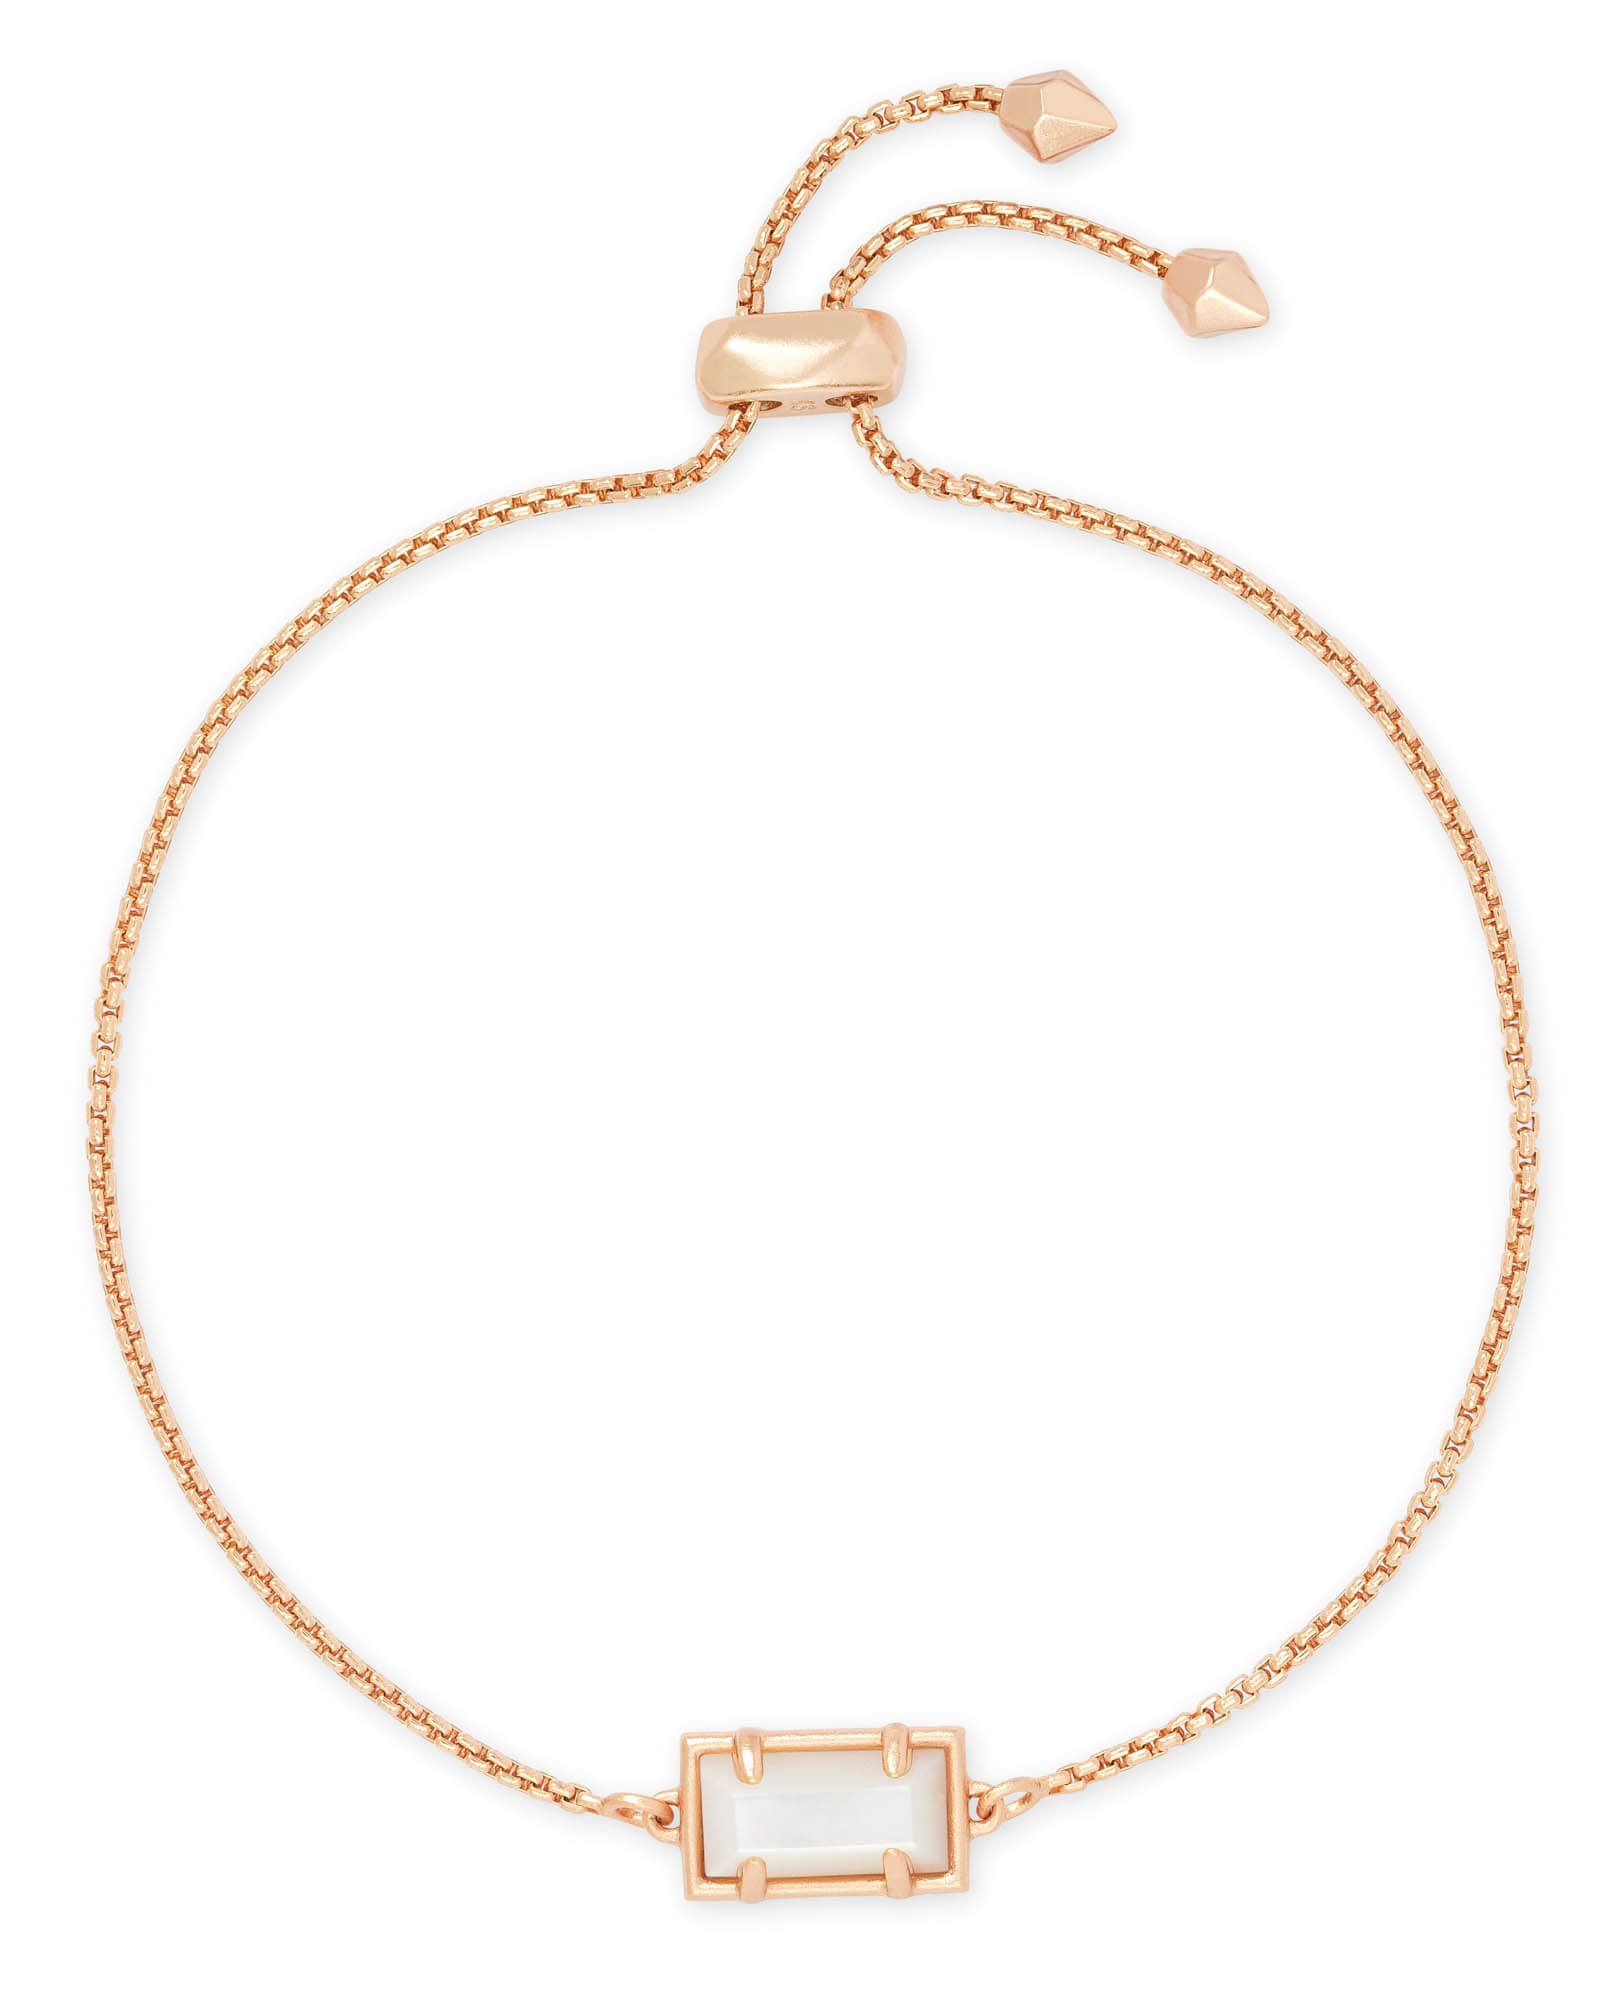 Phillipa Rose Gold Chain Bracelet in Ivory Pearl | Kendra Scott